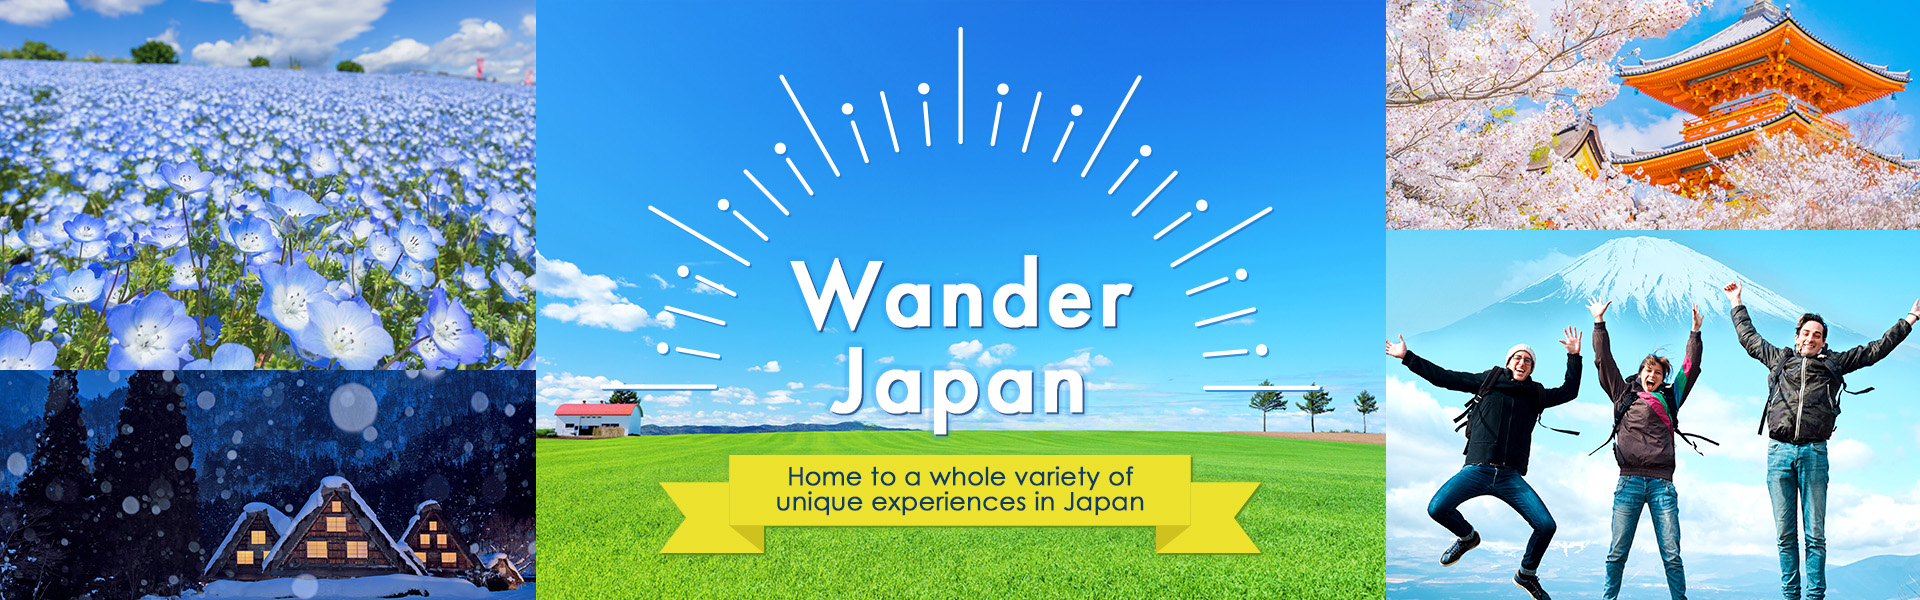 Wander Japan